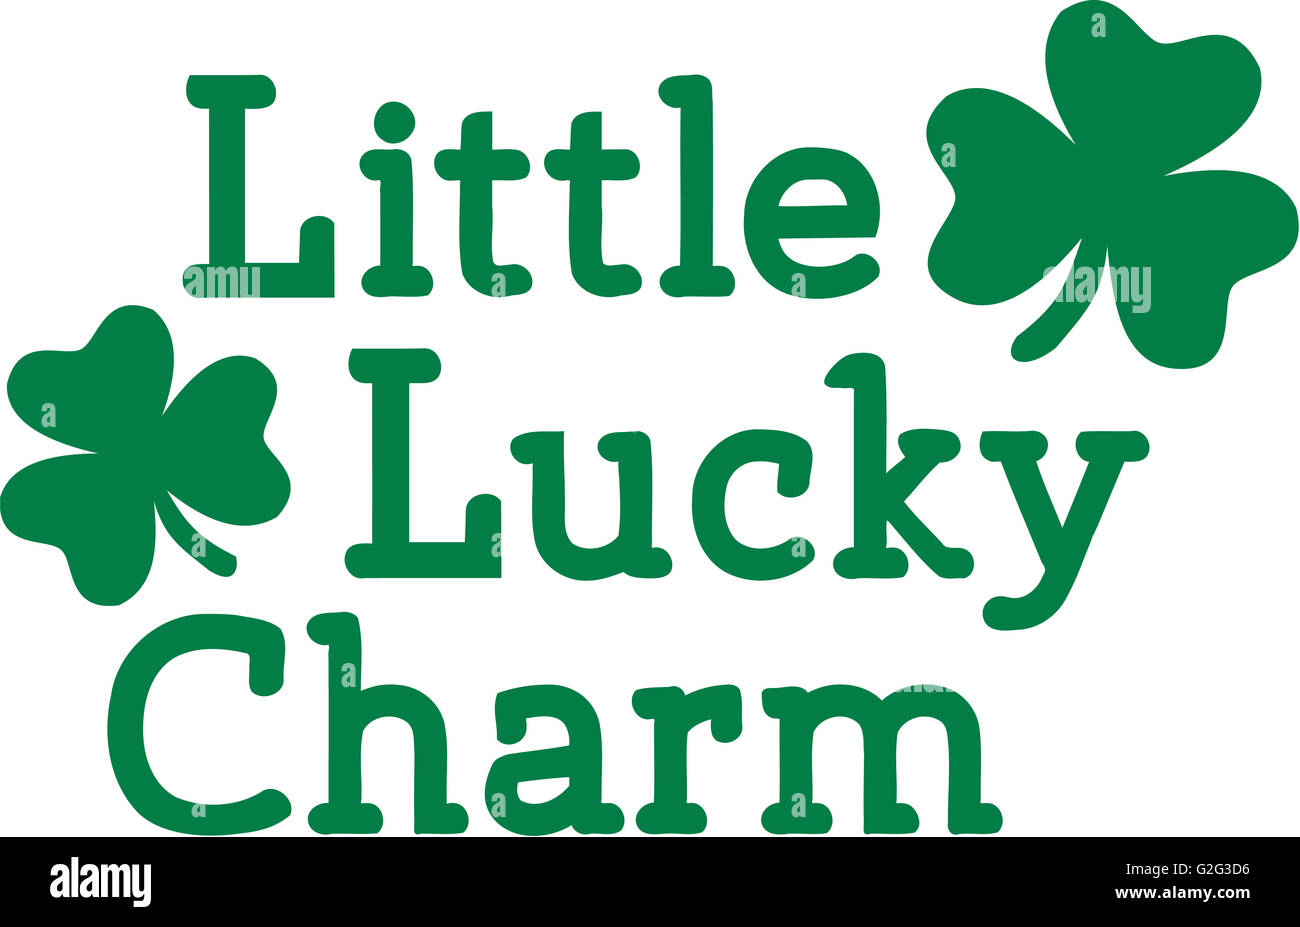 Cute irish text - Little lucky charm Stock Photo